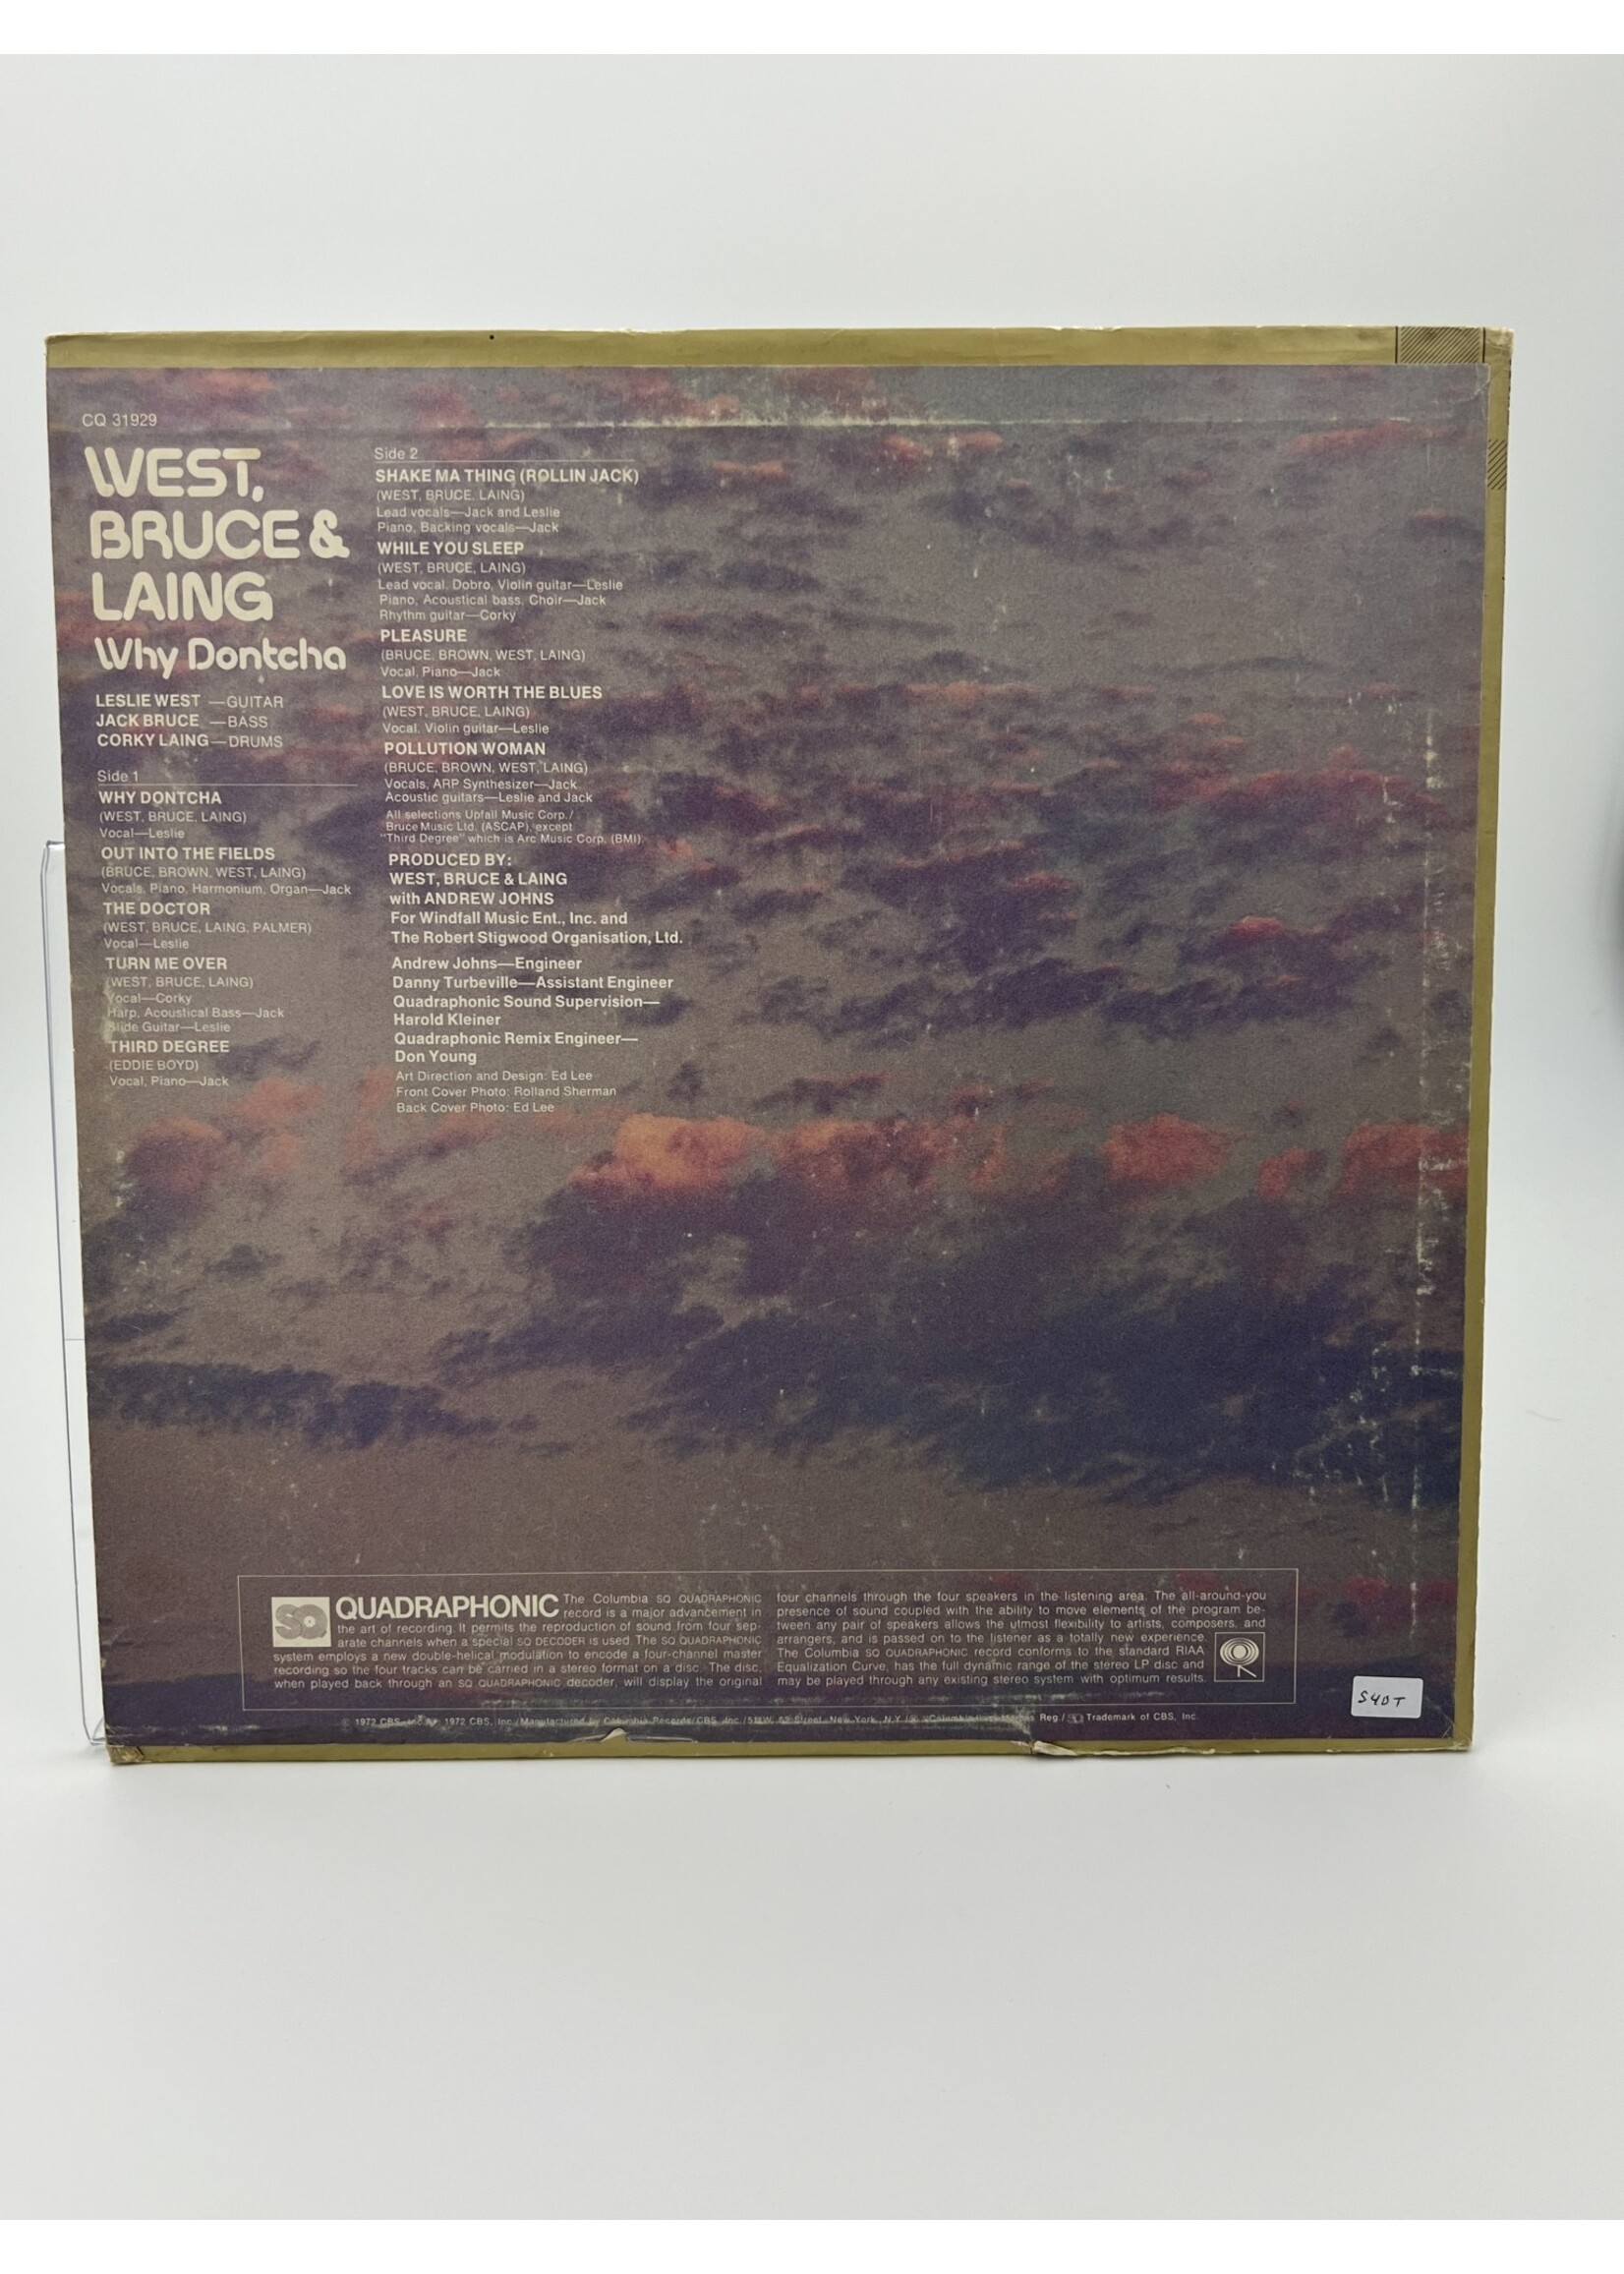 LP   West Bruce And Laing Why Dontcha Quadraphonic LP Record